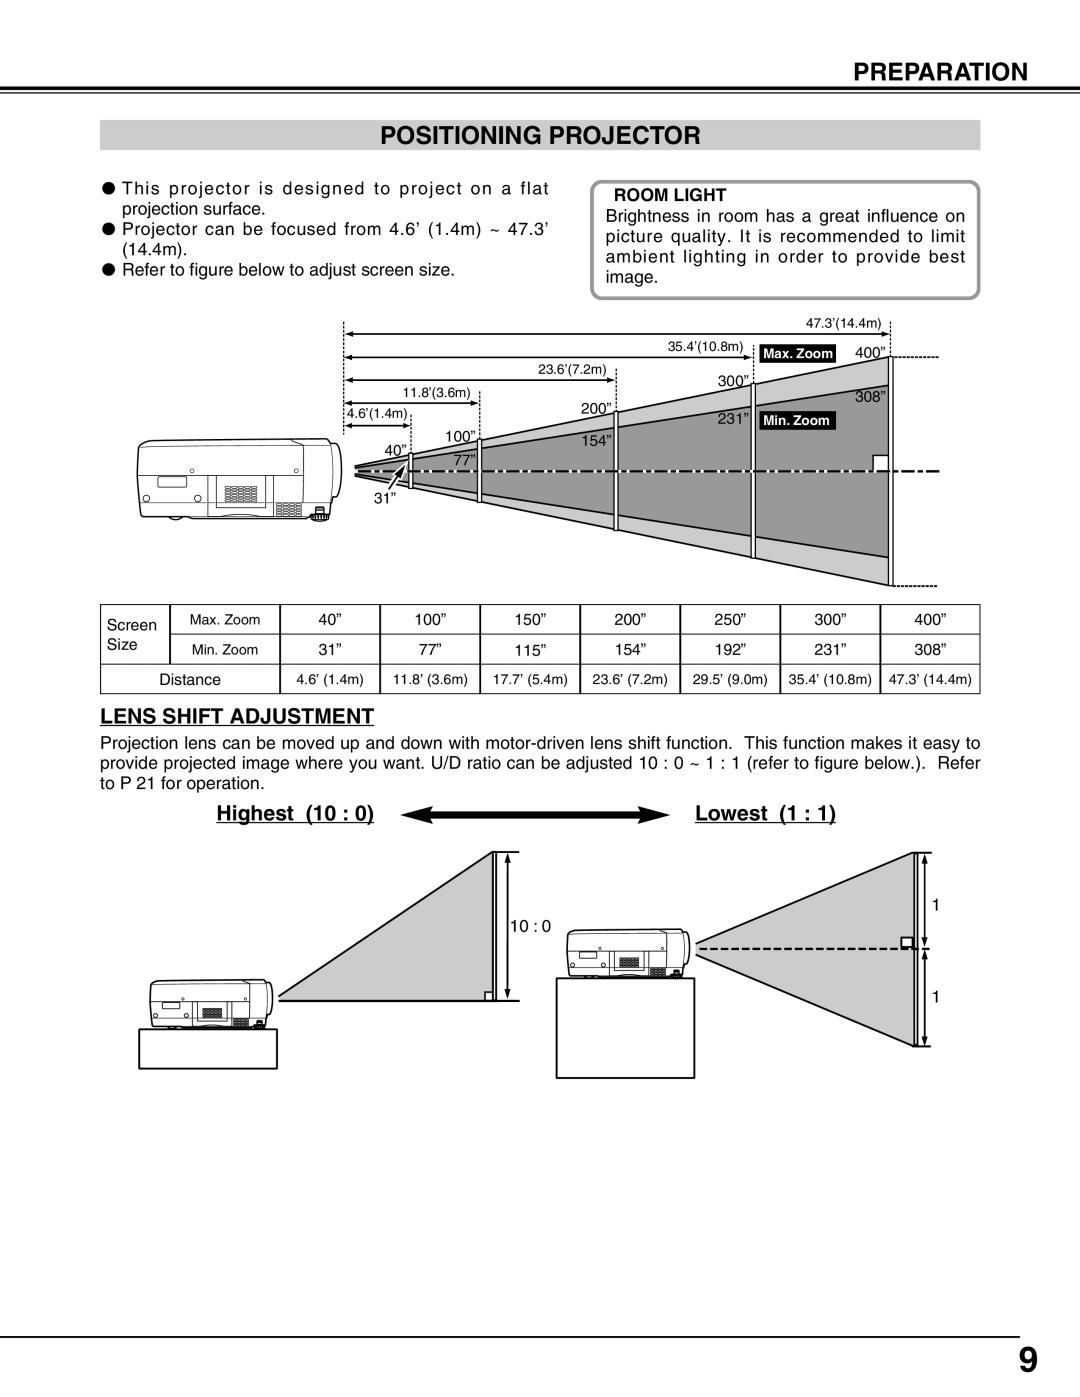 Eiki LC-X50 instruction manual Preparation Positioning Projector, Lens Shift Adjustment, Highest, Lowest 